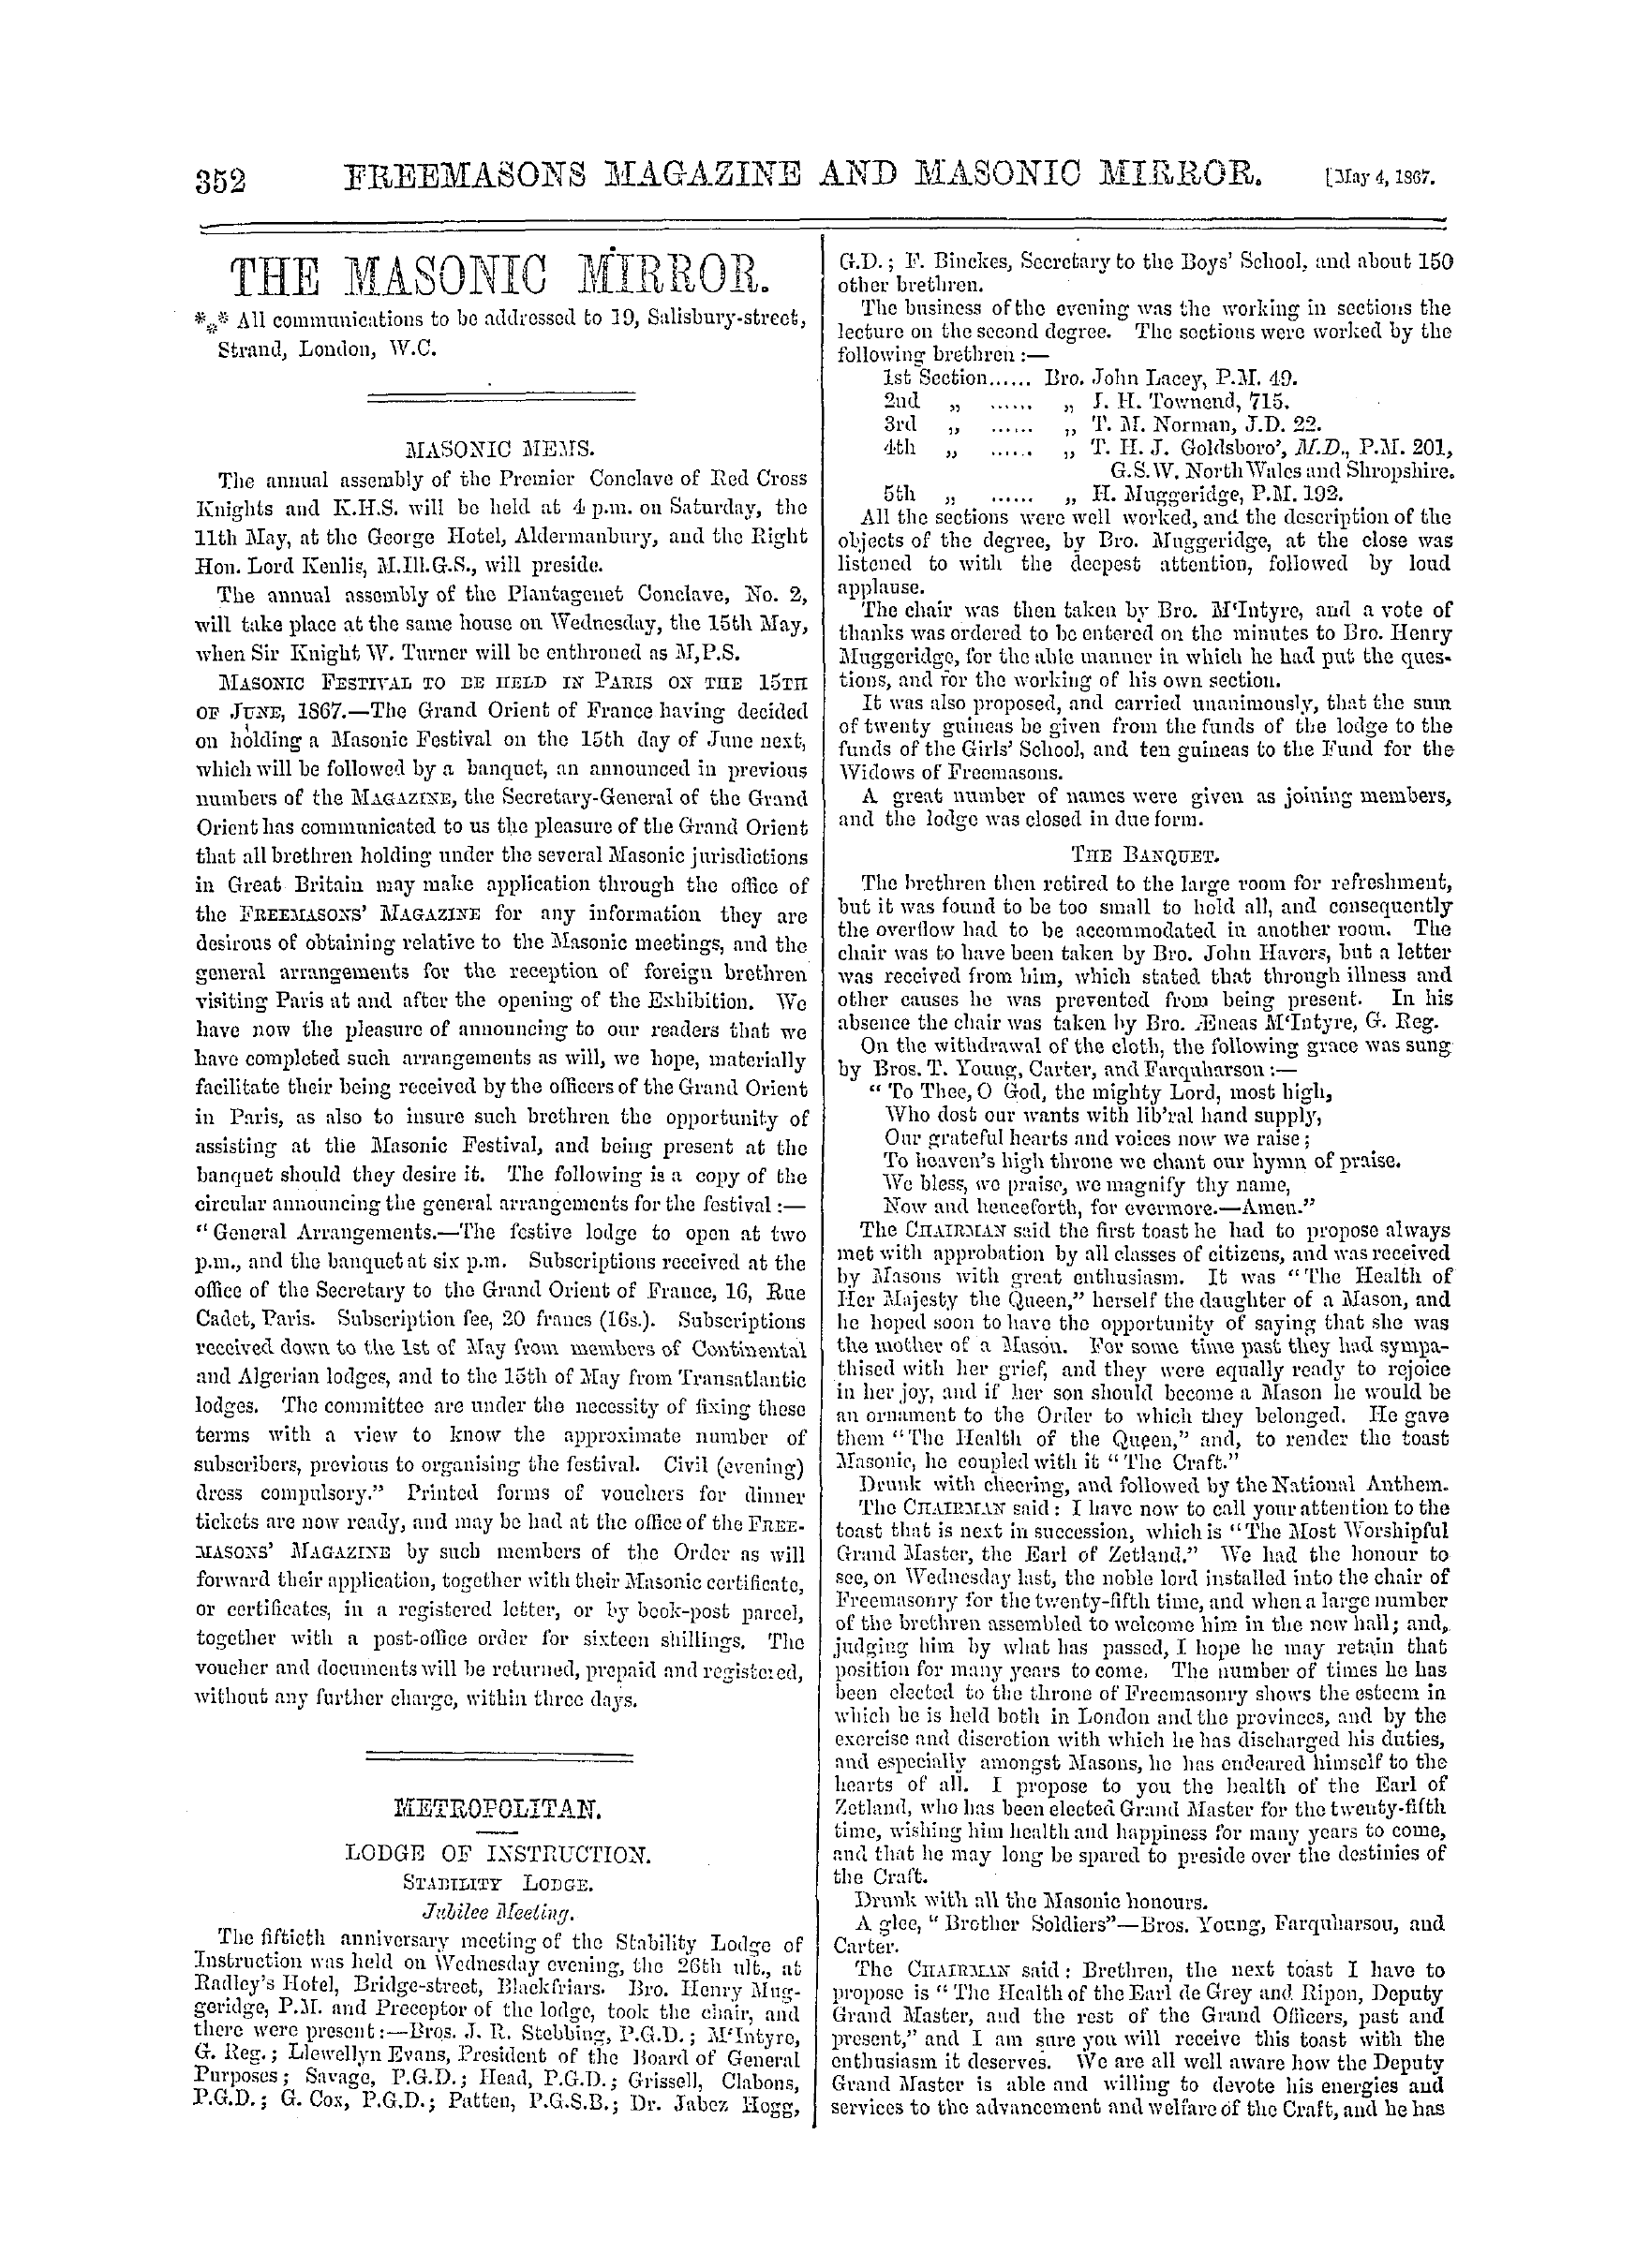 The Freemasons' Monthly Magazine: 1867-05-04 - Masonic Mems.